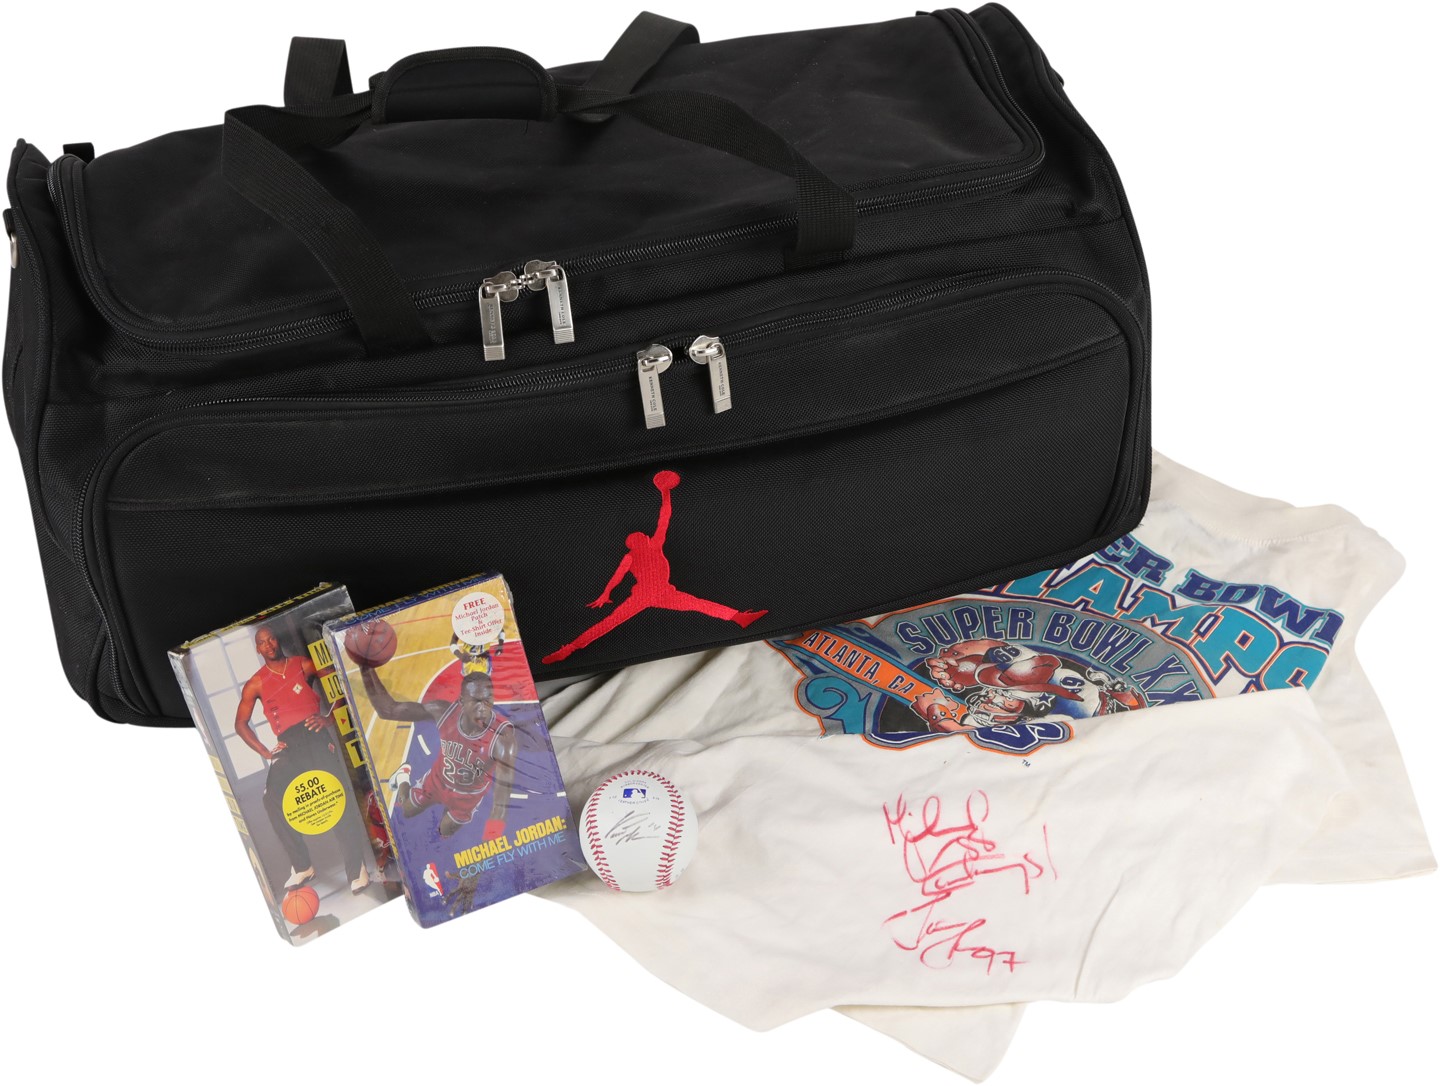 - Miscellaneous Items from John Michael Wozniak Collection with Prototype Michael Jordan Brand Luggage Bag